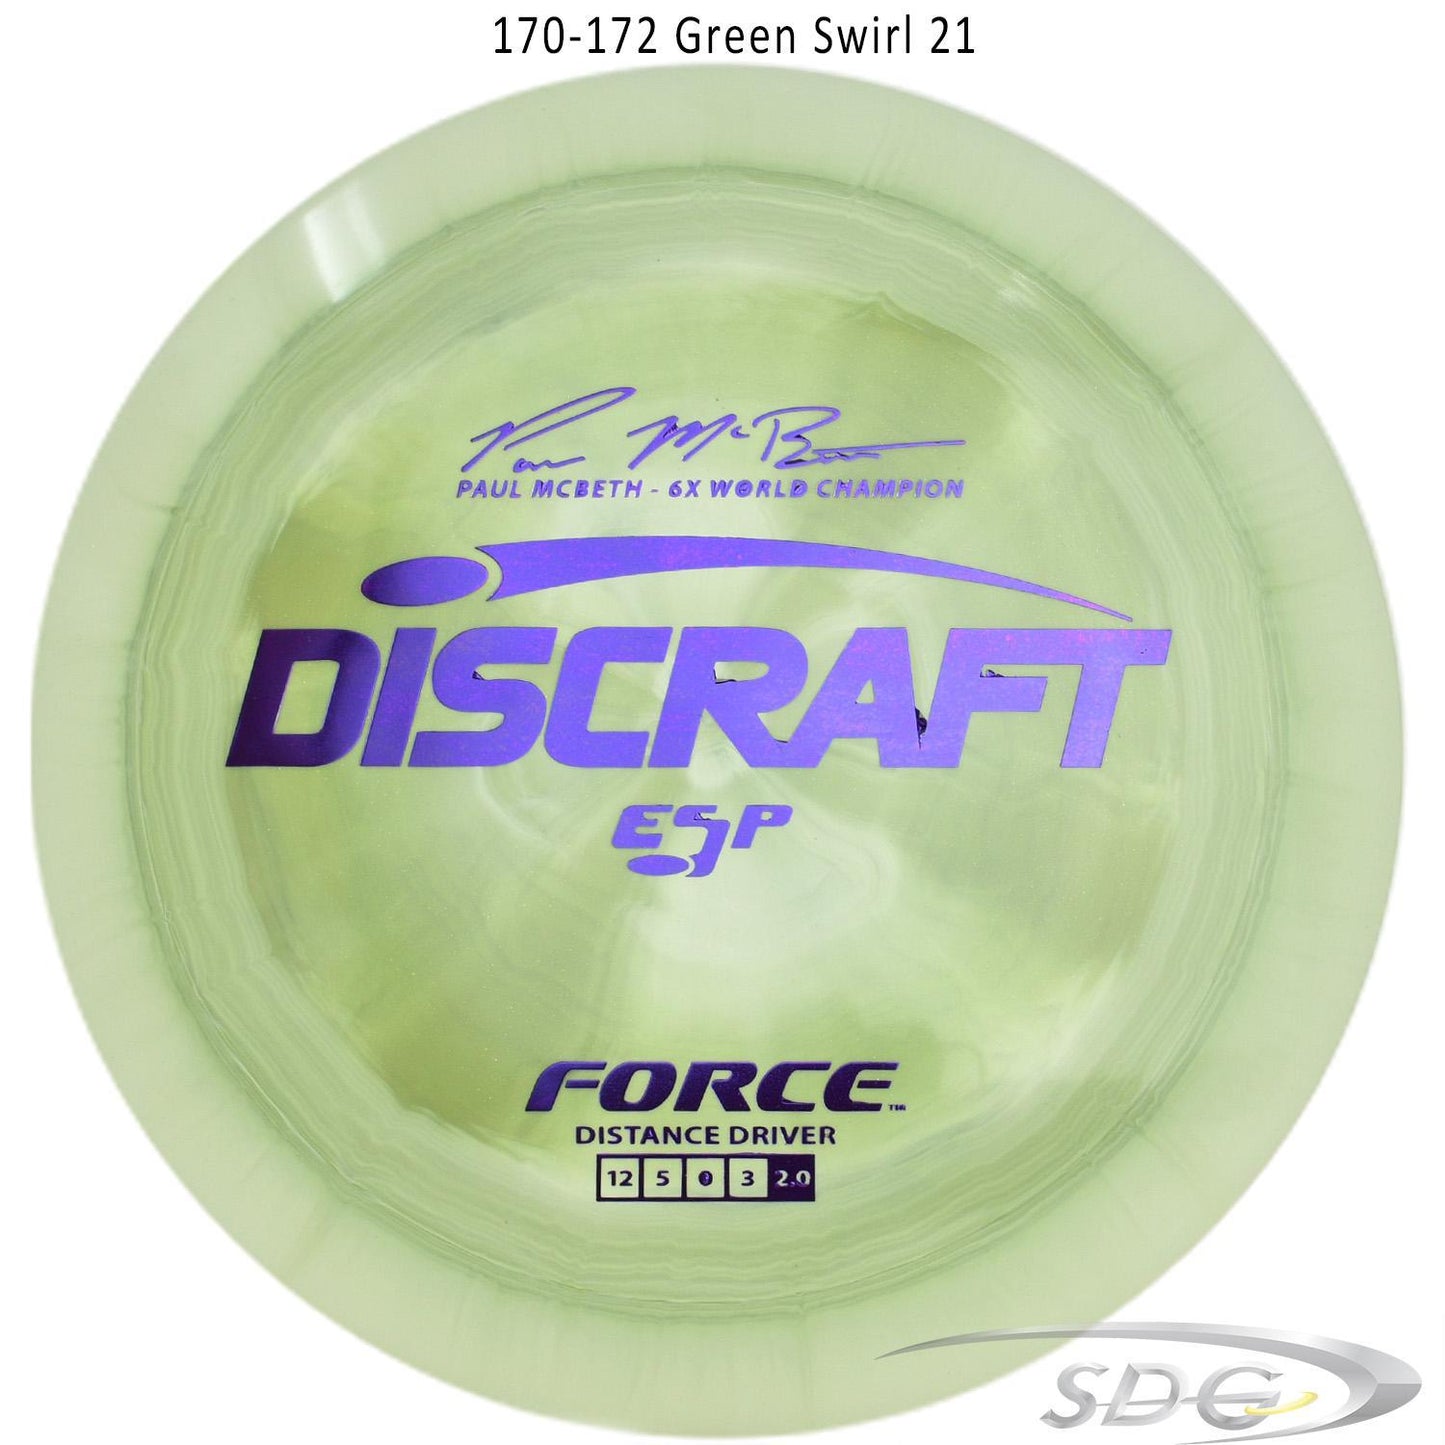 discraft-esp-force-6x-paul-mcbeth-signature-disc-golf-distance-driver 170-172 Green Swirl 21 